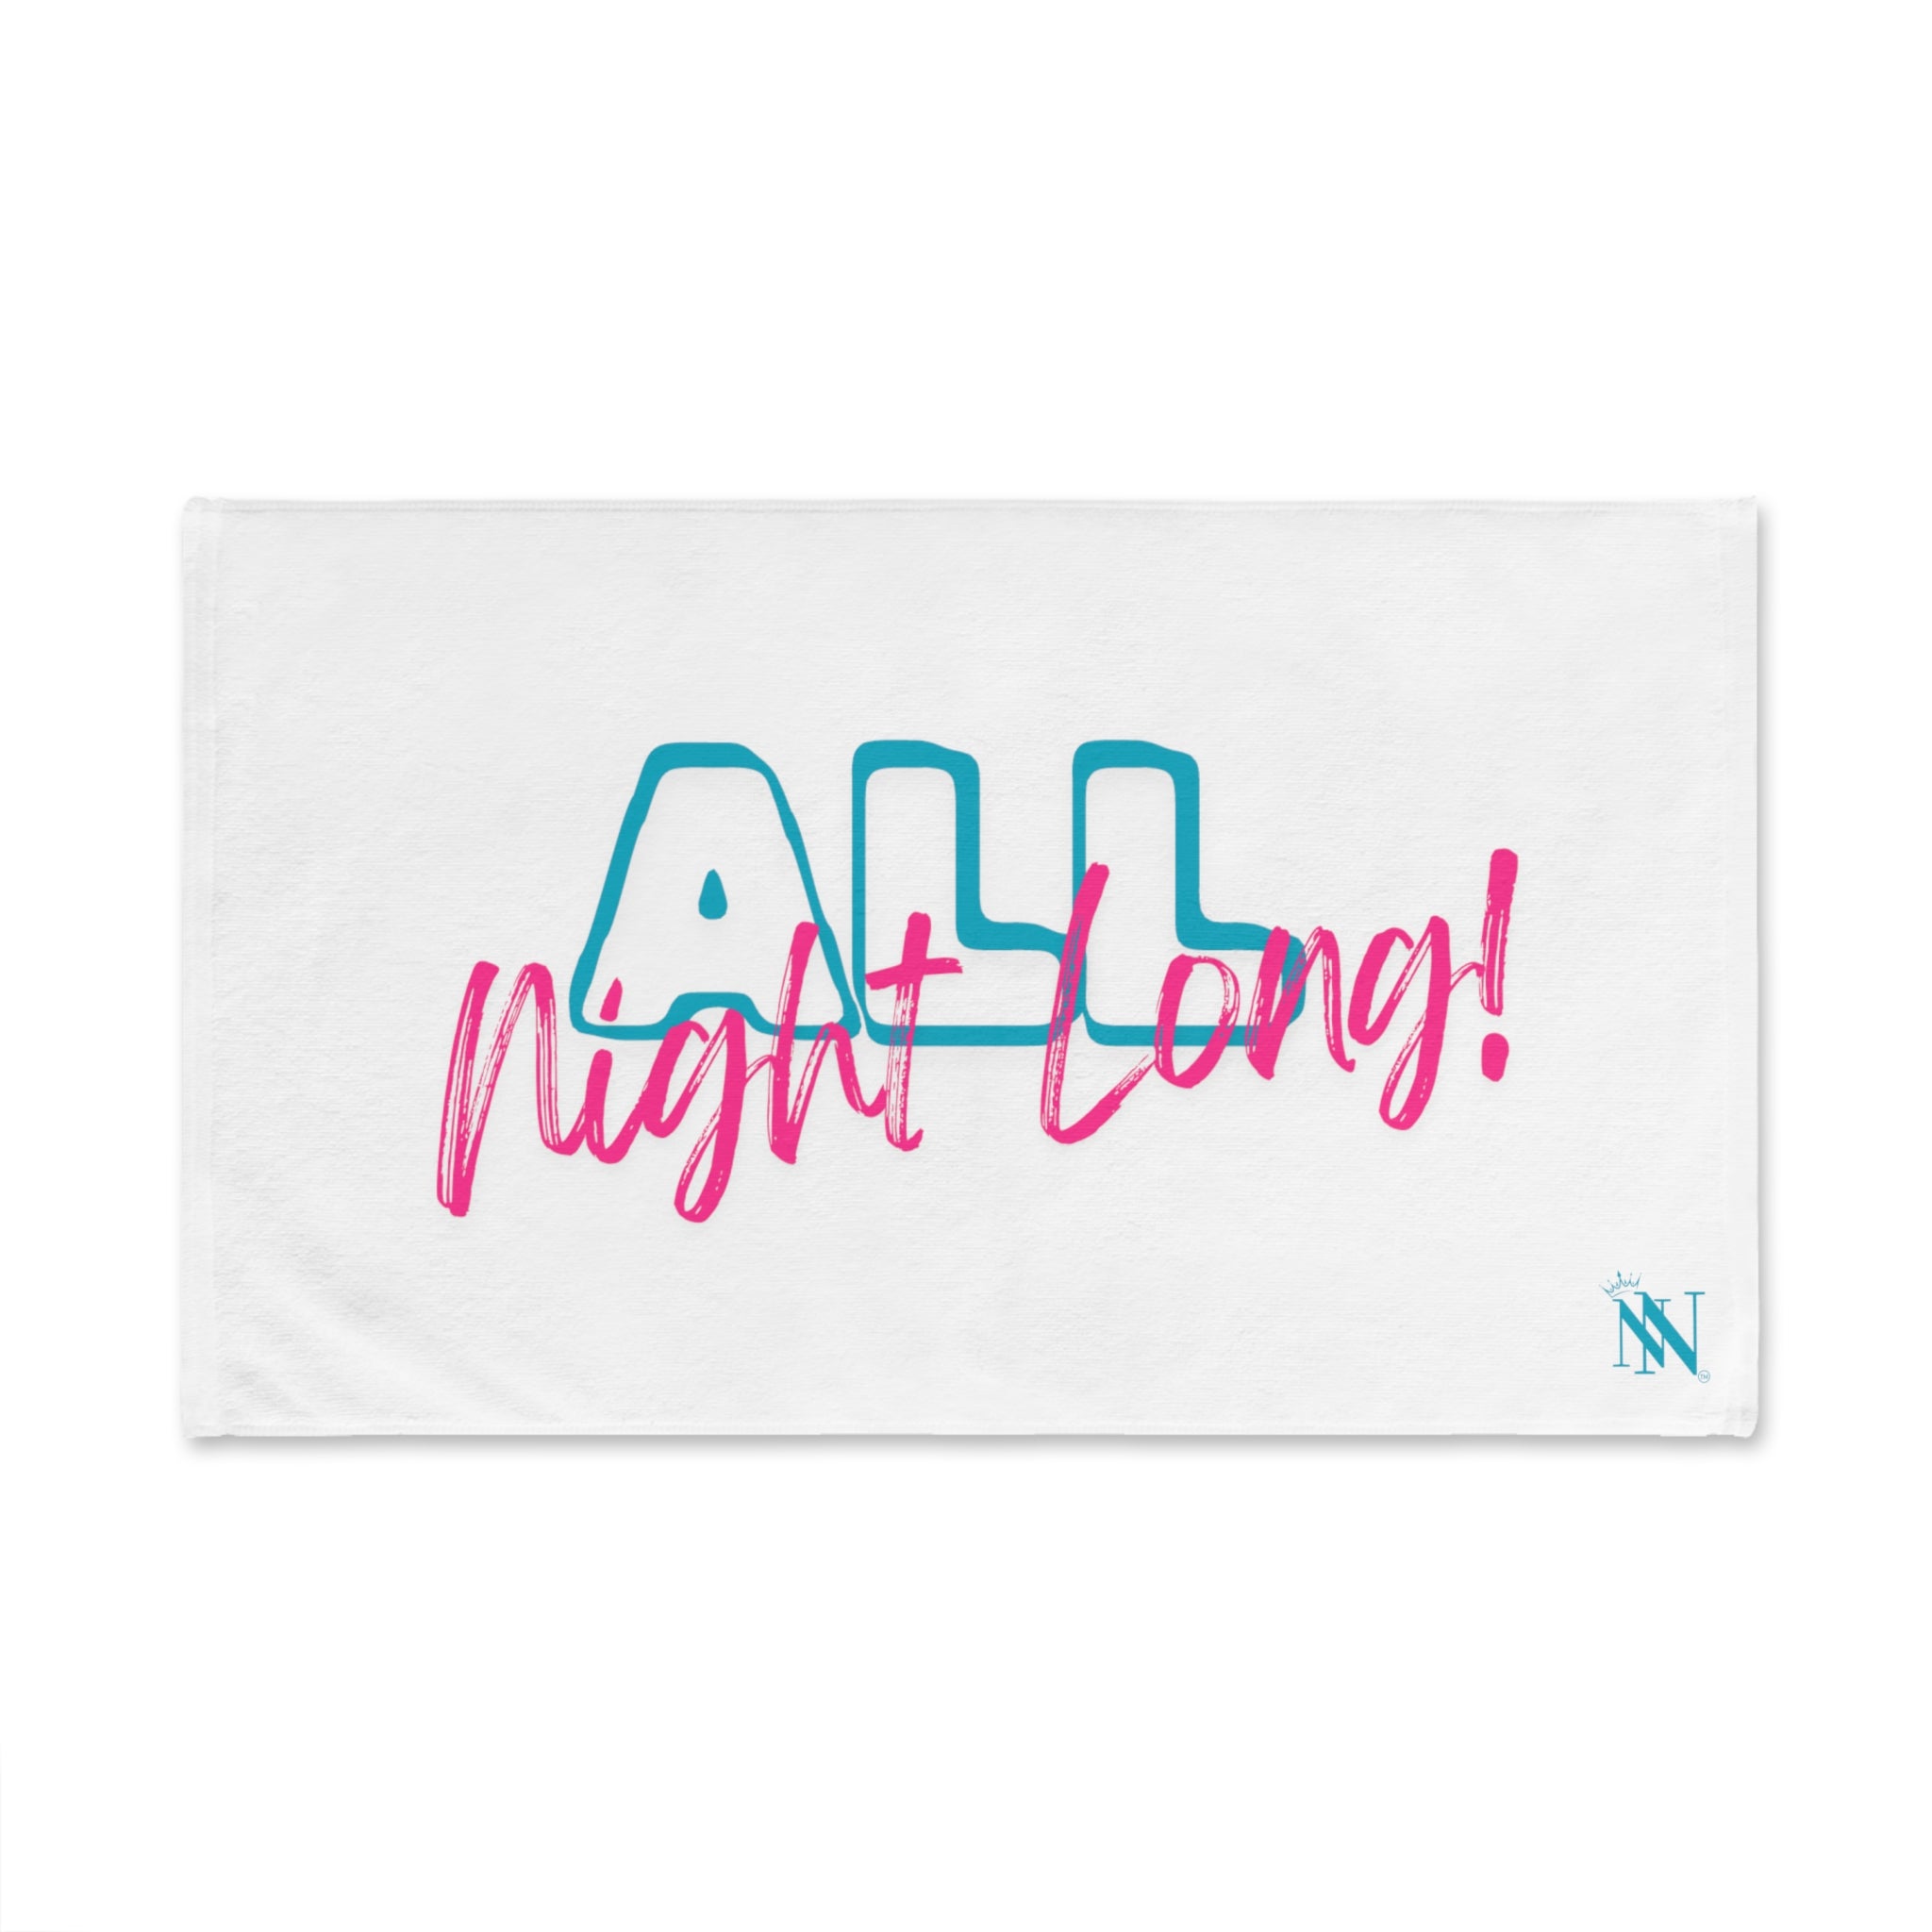 All night long sex towel